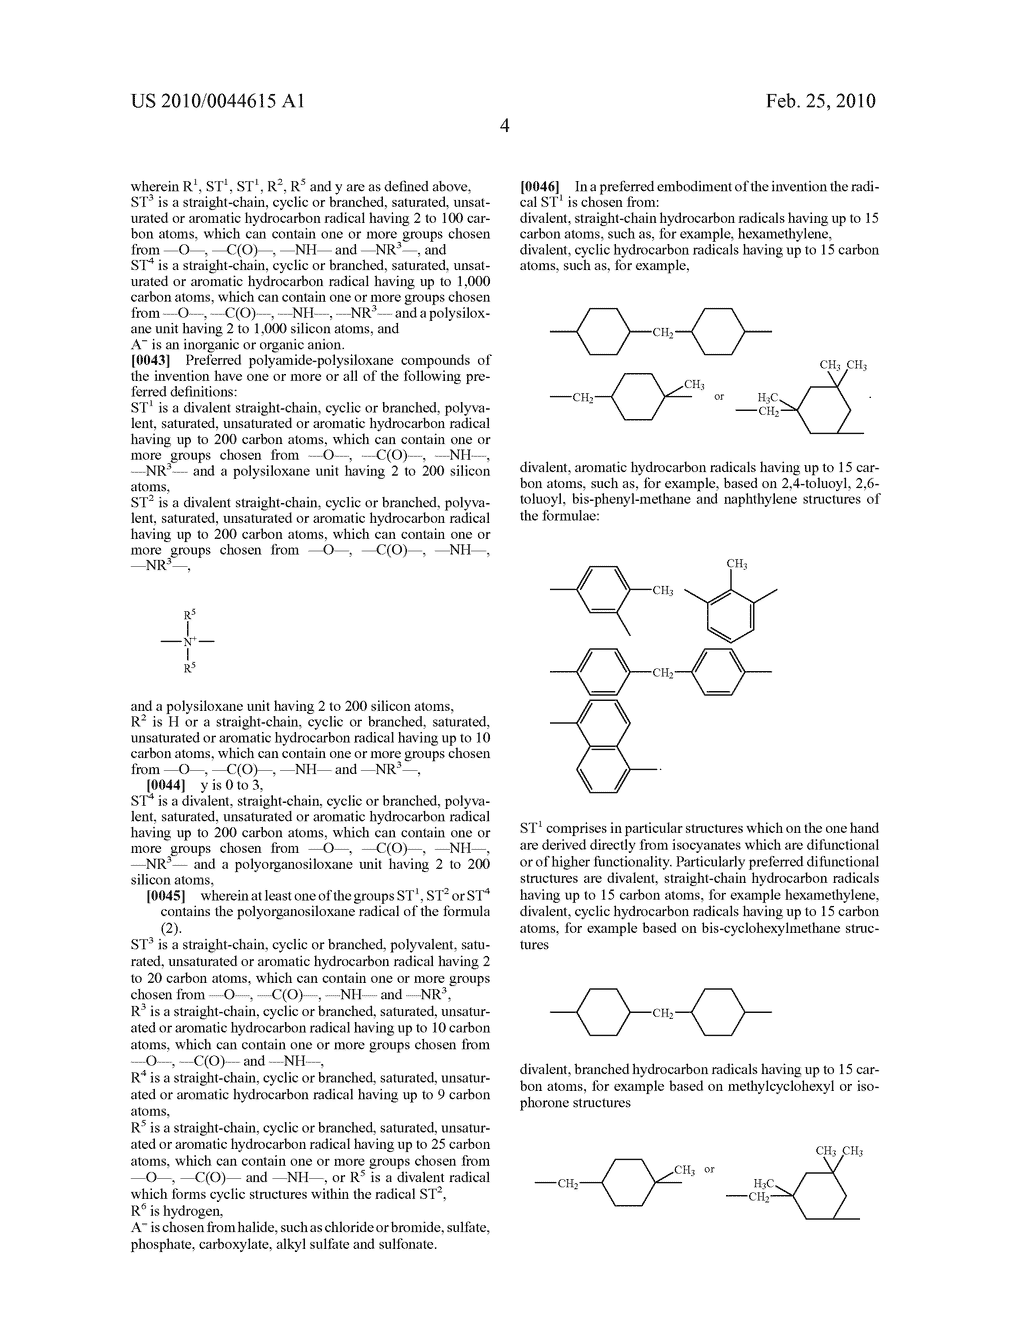 Novel Polyamide-Polysiloxane Compounds - diagram, schematic, and image 05